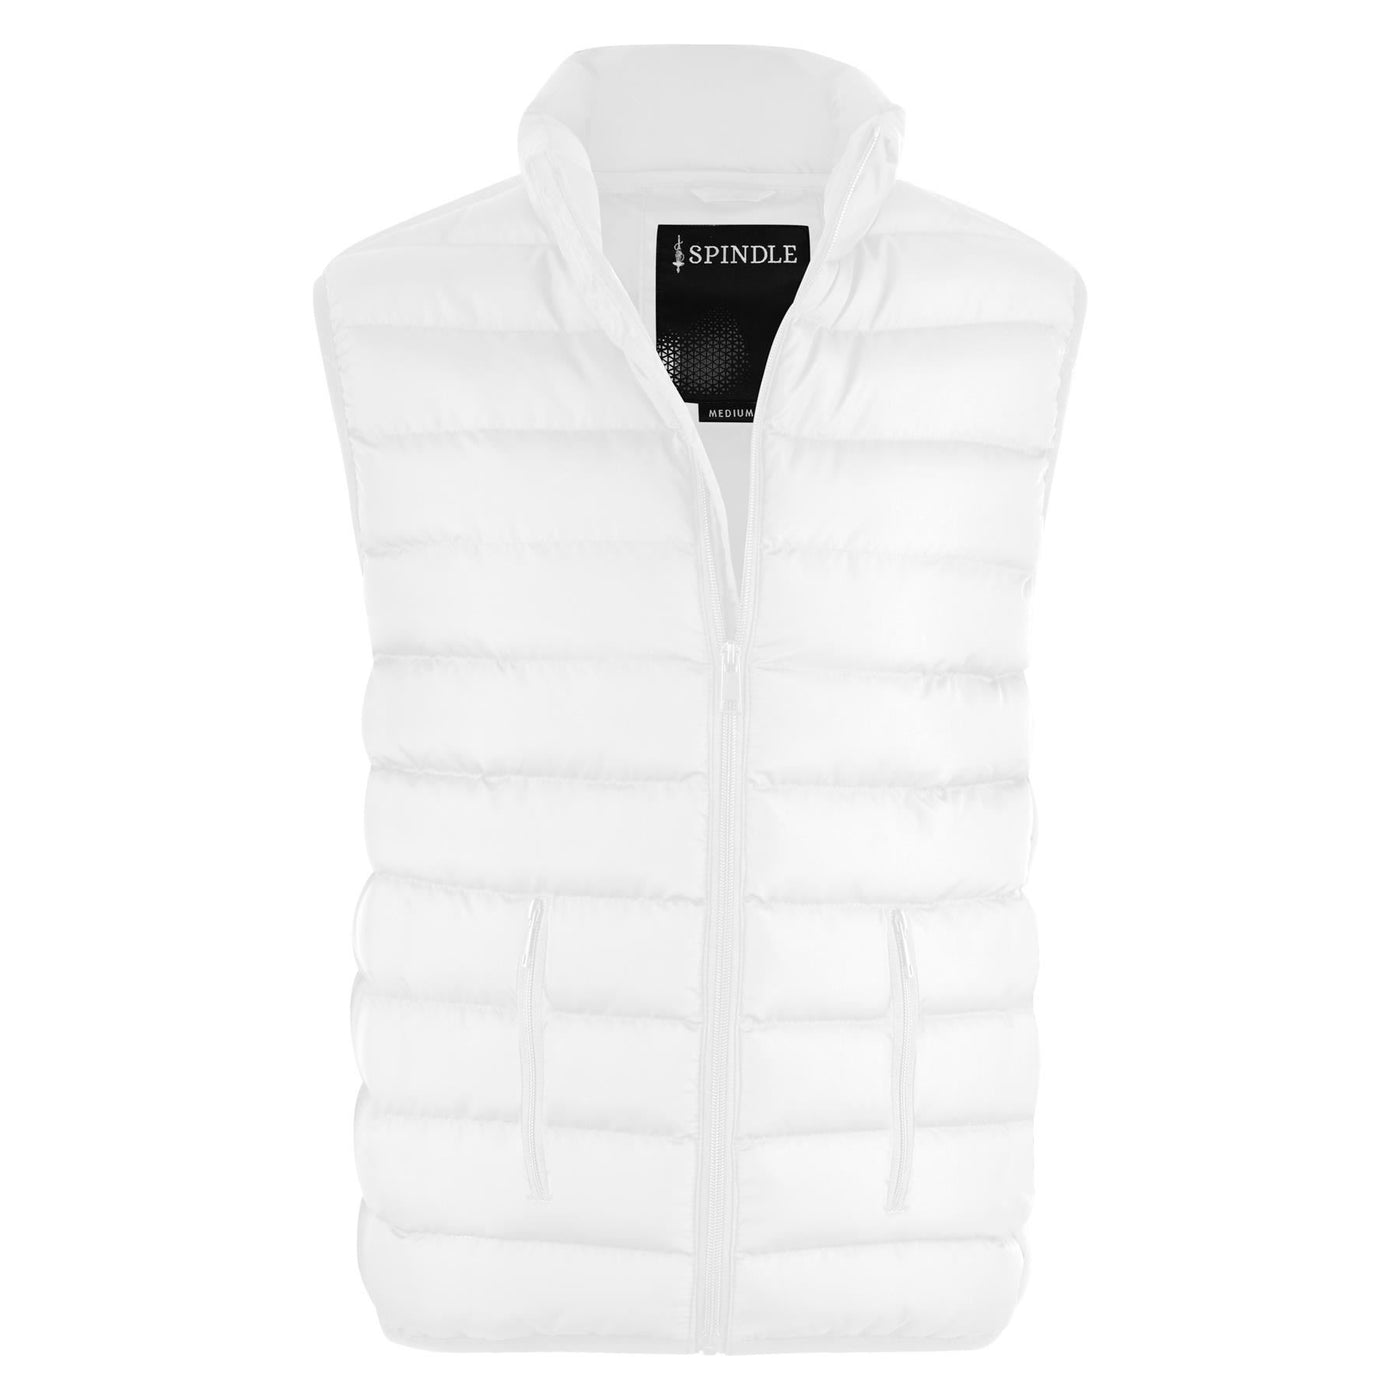 Mens Plain Black Padded Gilet Body Warmer Sleeveless Vest Jacket Zip Pockets Without Hood S M L XL XXL Bodywarmer Gillet Sleeveless